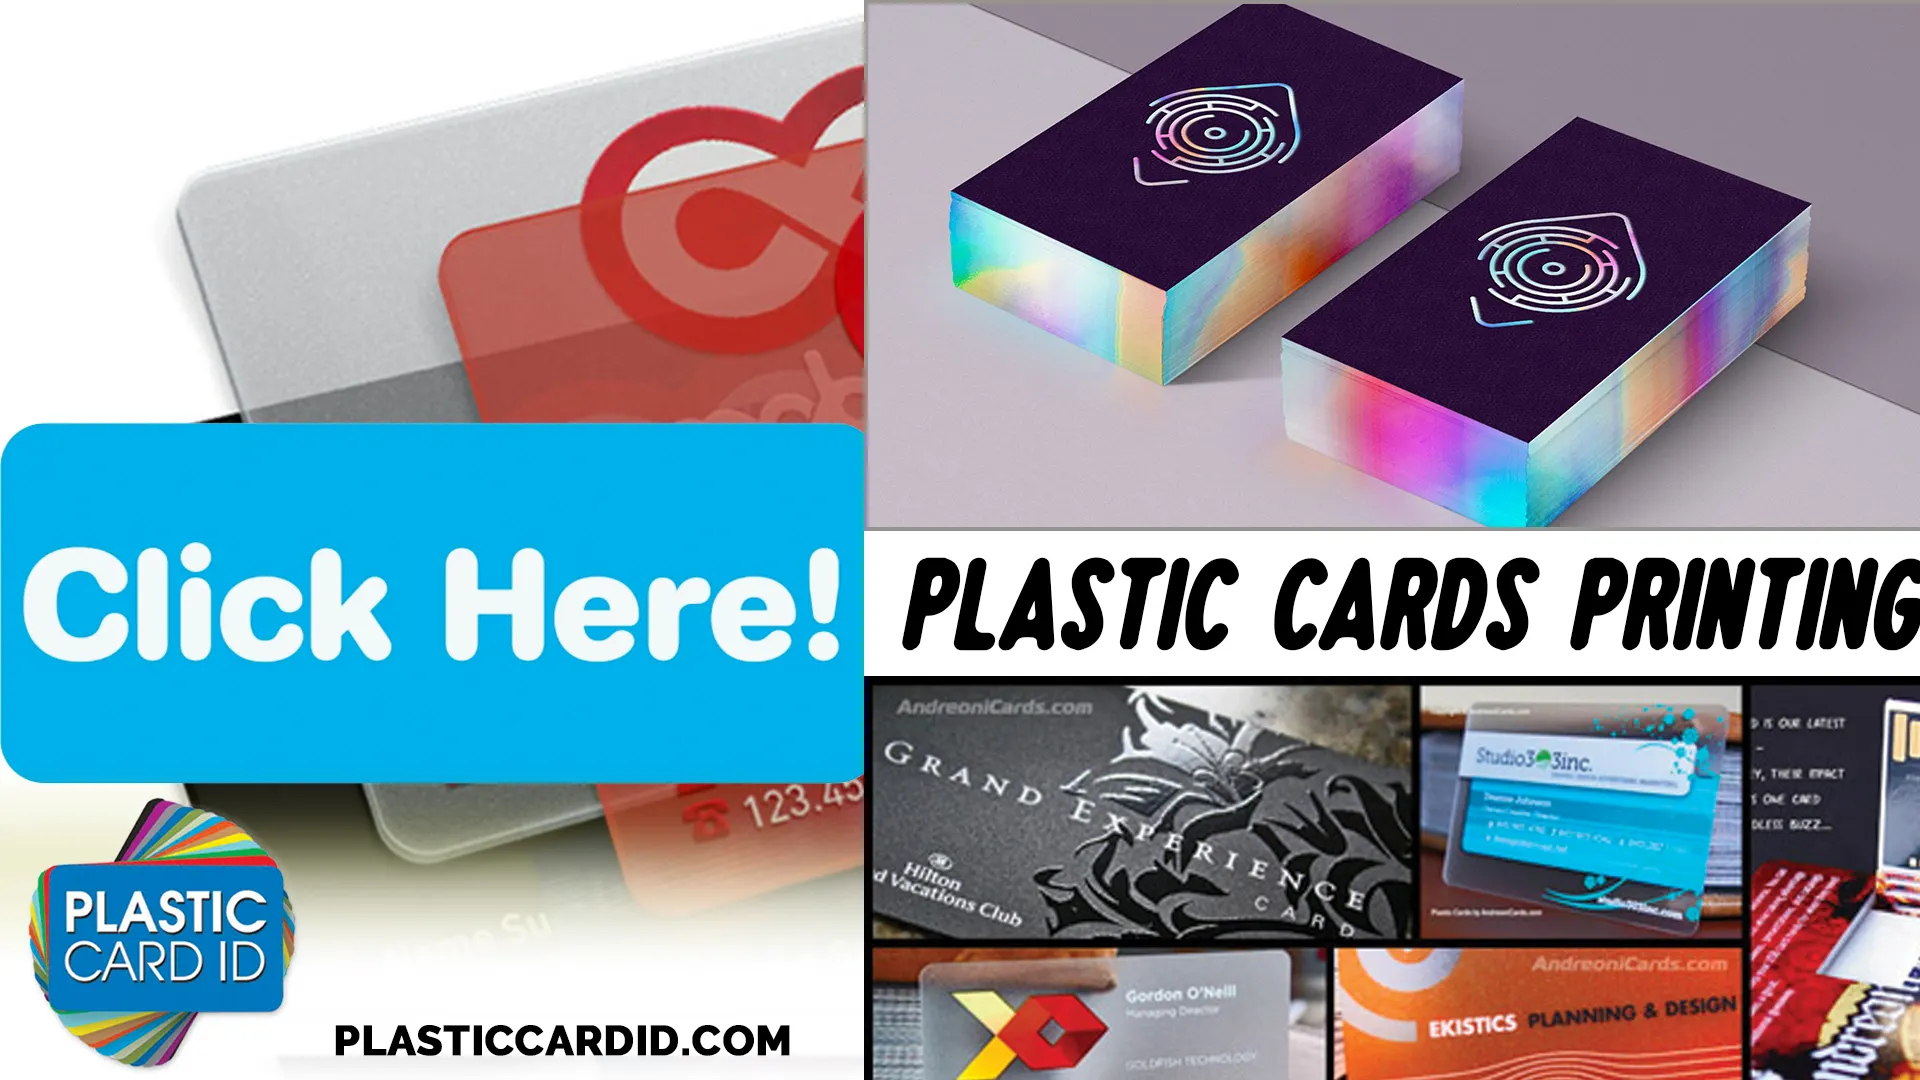 Understanding Plastic Card Lifecycle